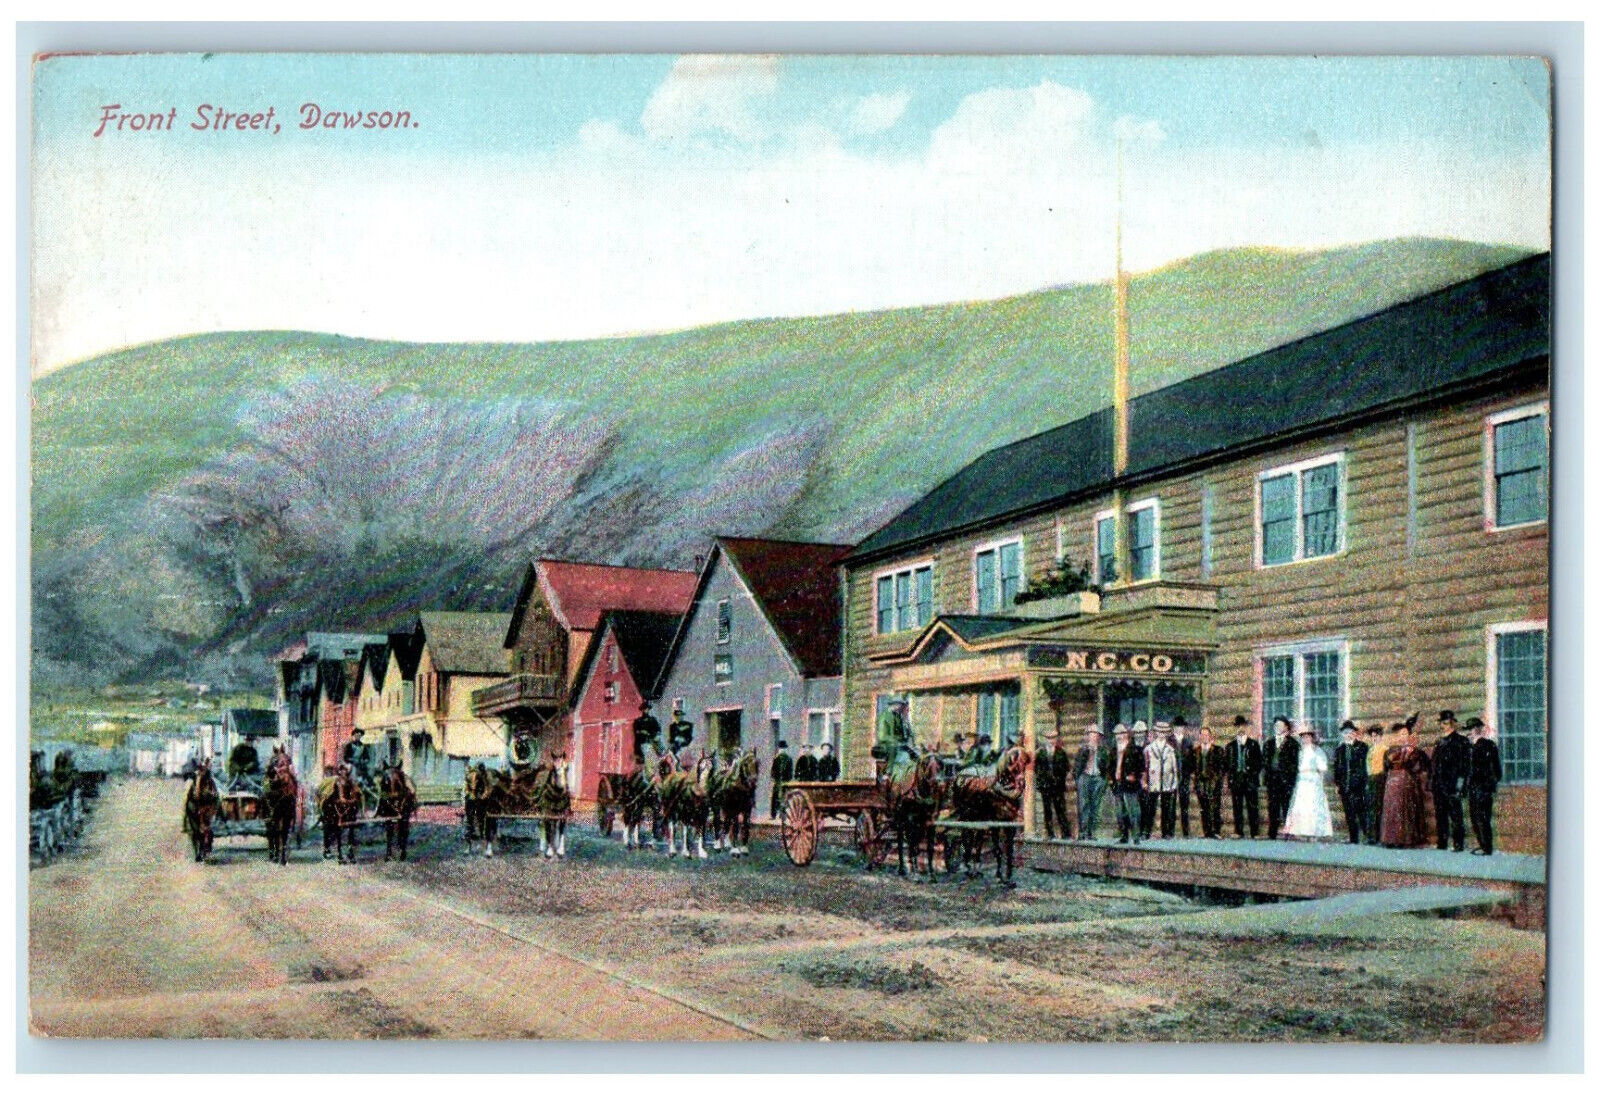 Dawson Yukon Canada Postcard Front Street NC Co Building Horse Carriage c1910